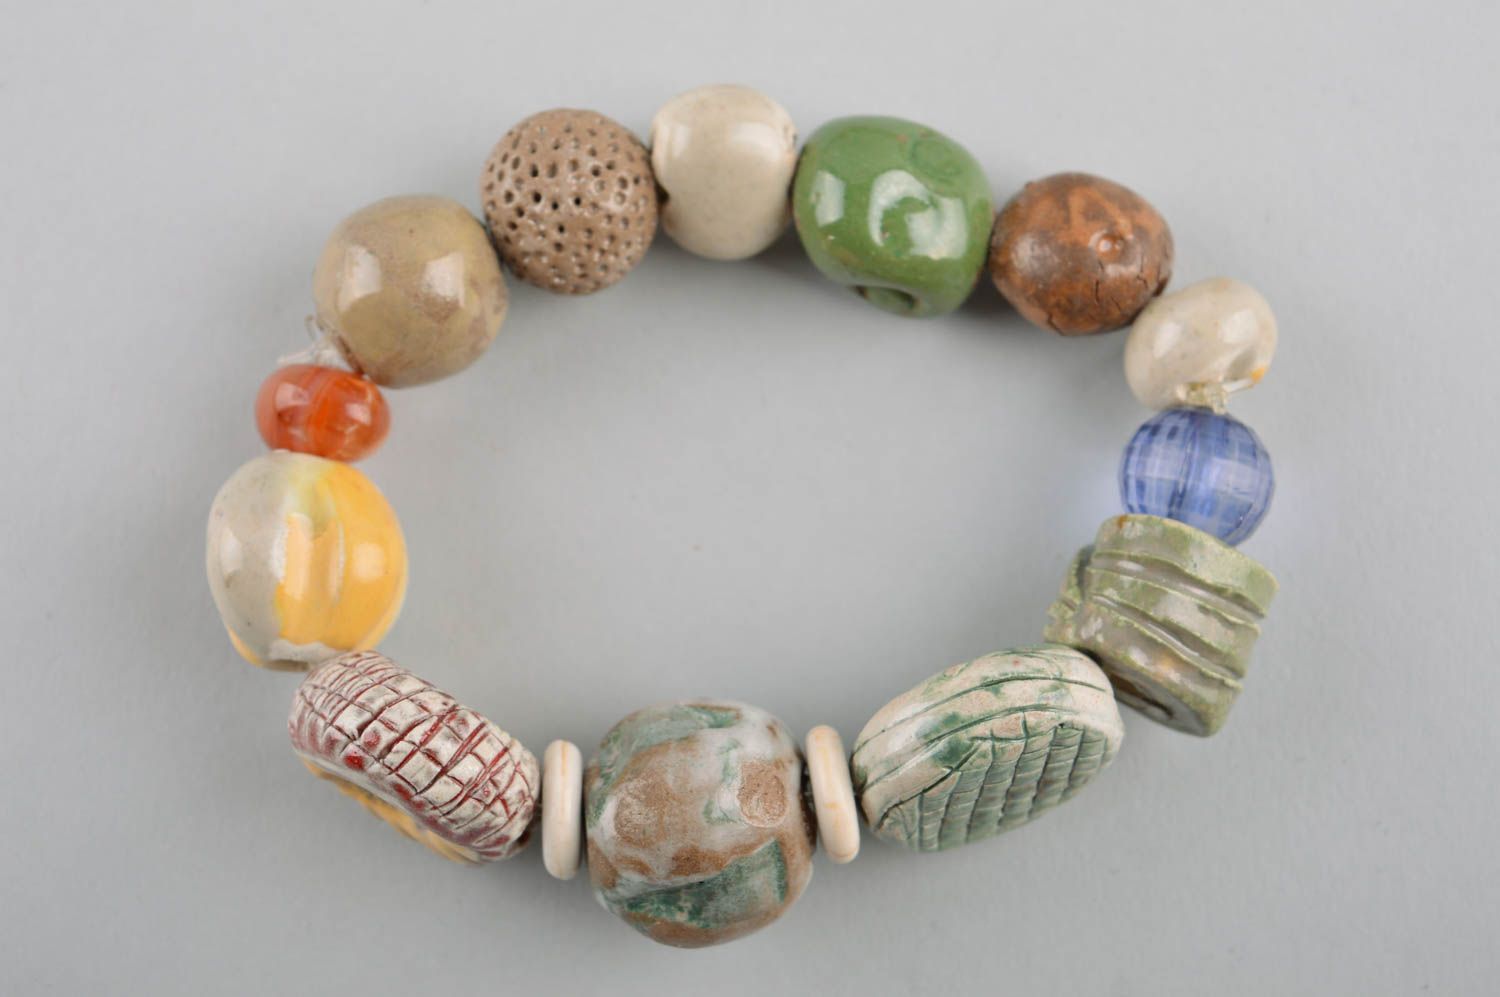 Beautiful handmade ceramic bracelet fashion accessories pottery works ideas photo 2